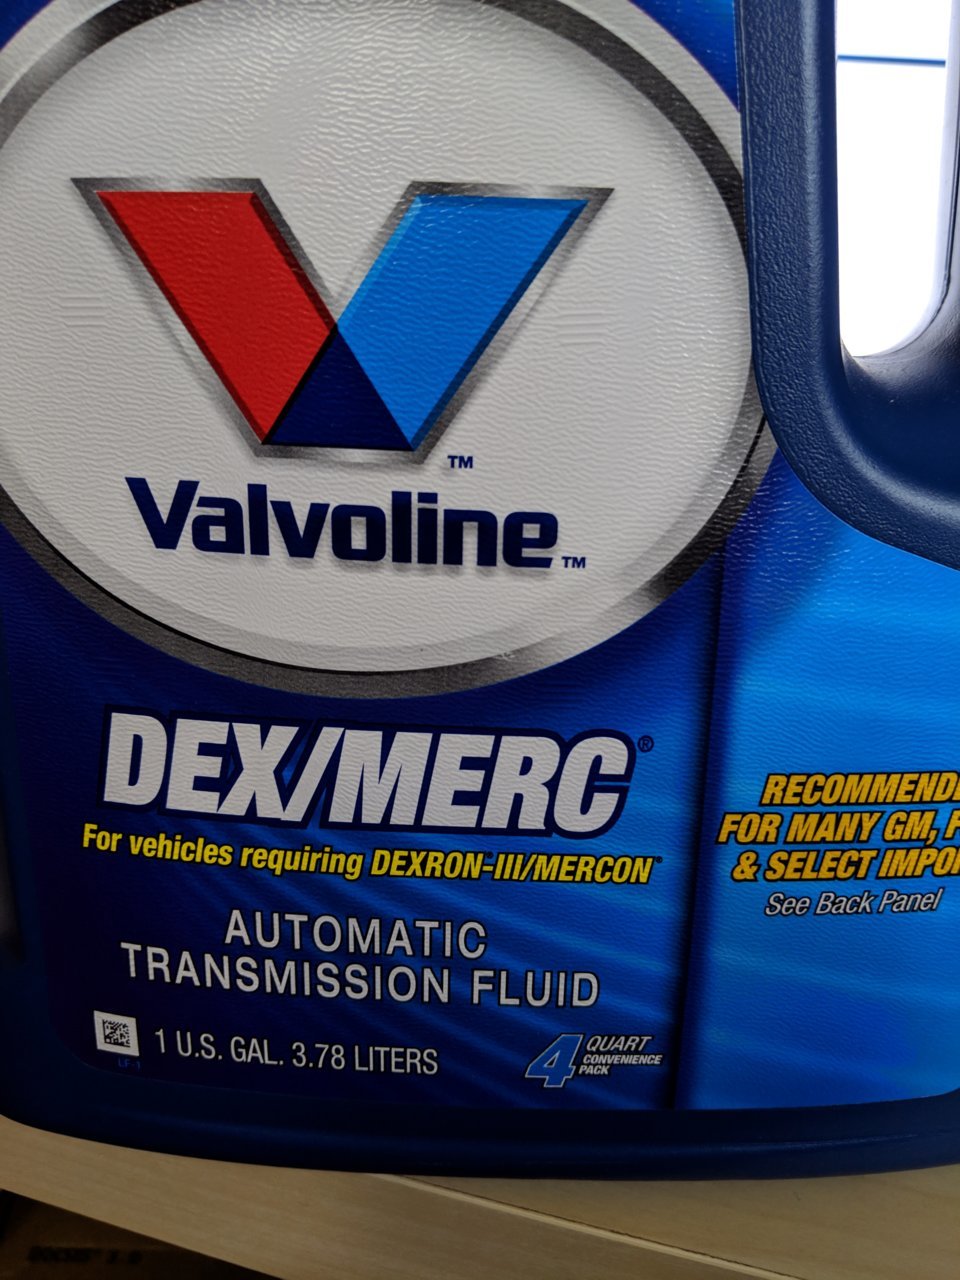 Valvoline Dex/Merc Automatic Transmission Fluid - 1 Gal